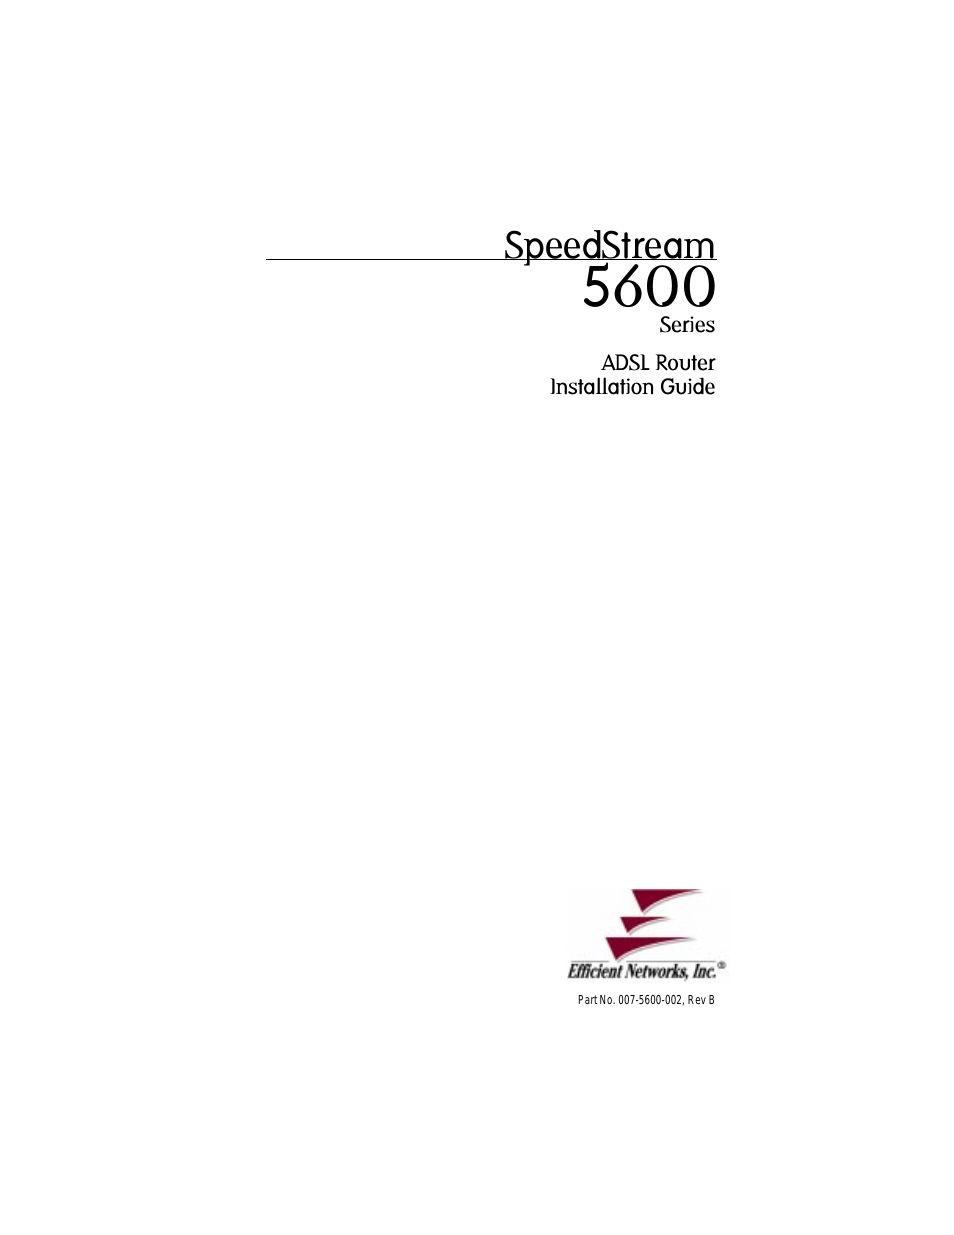 SpeedStream 5600 Series